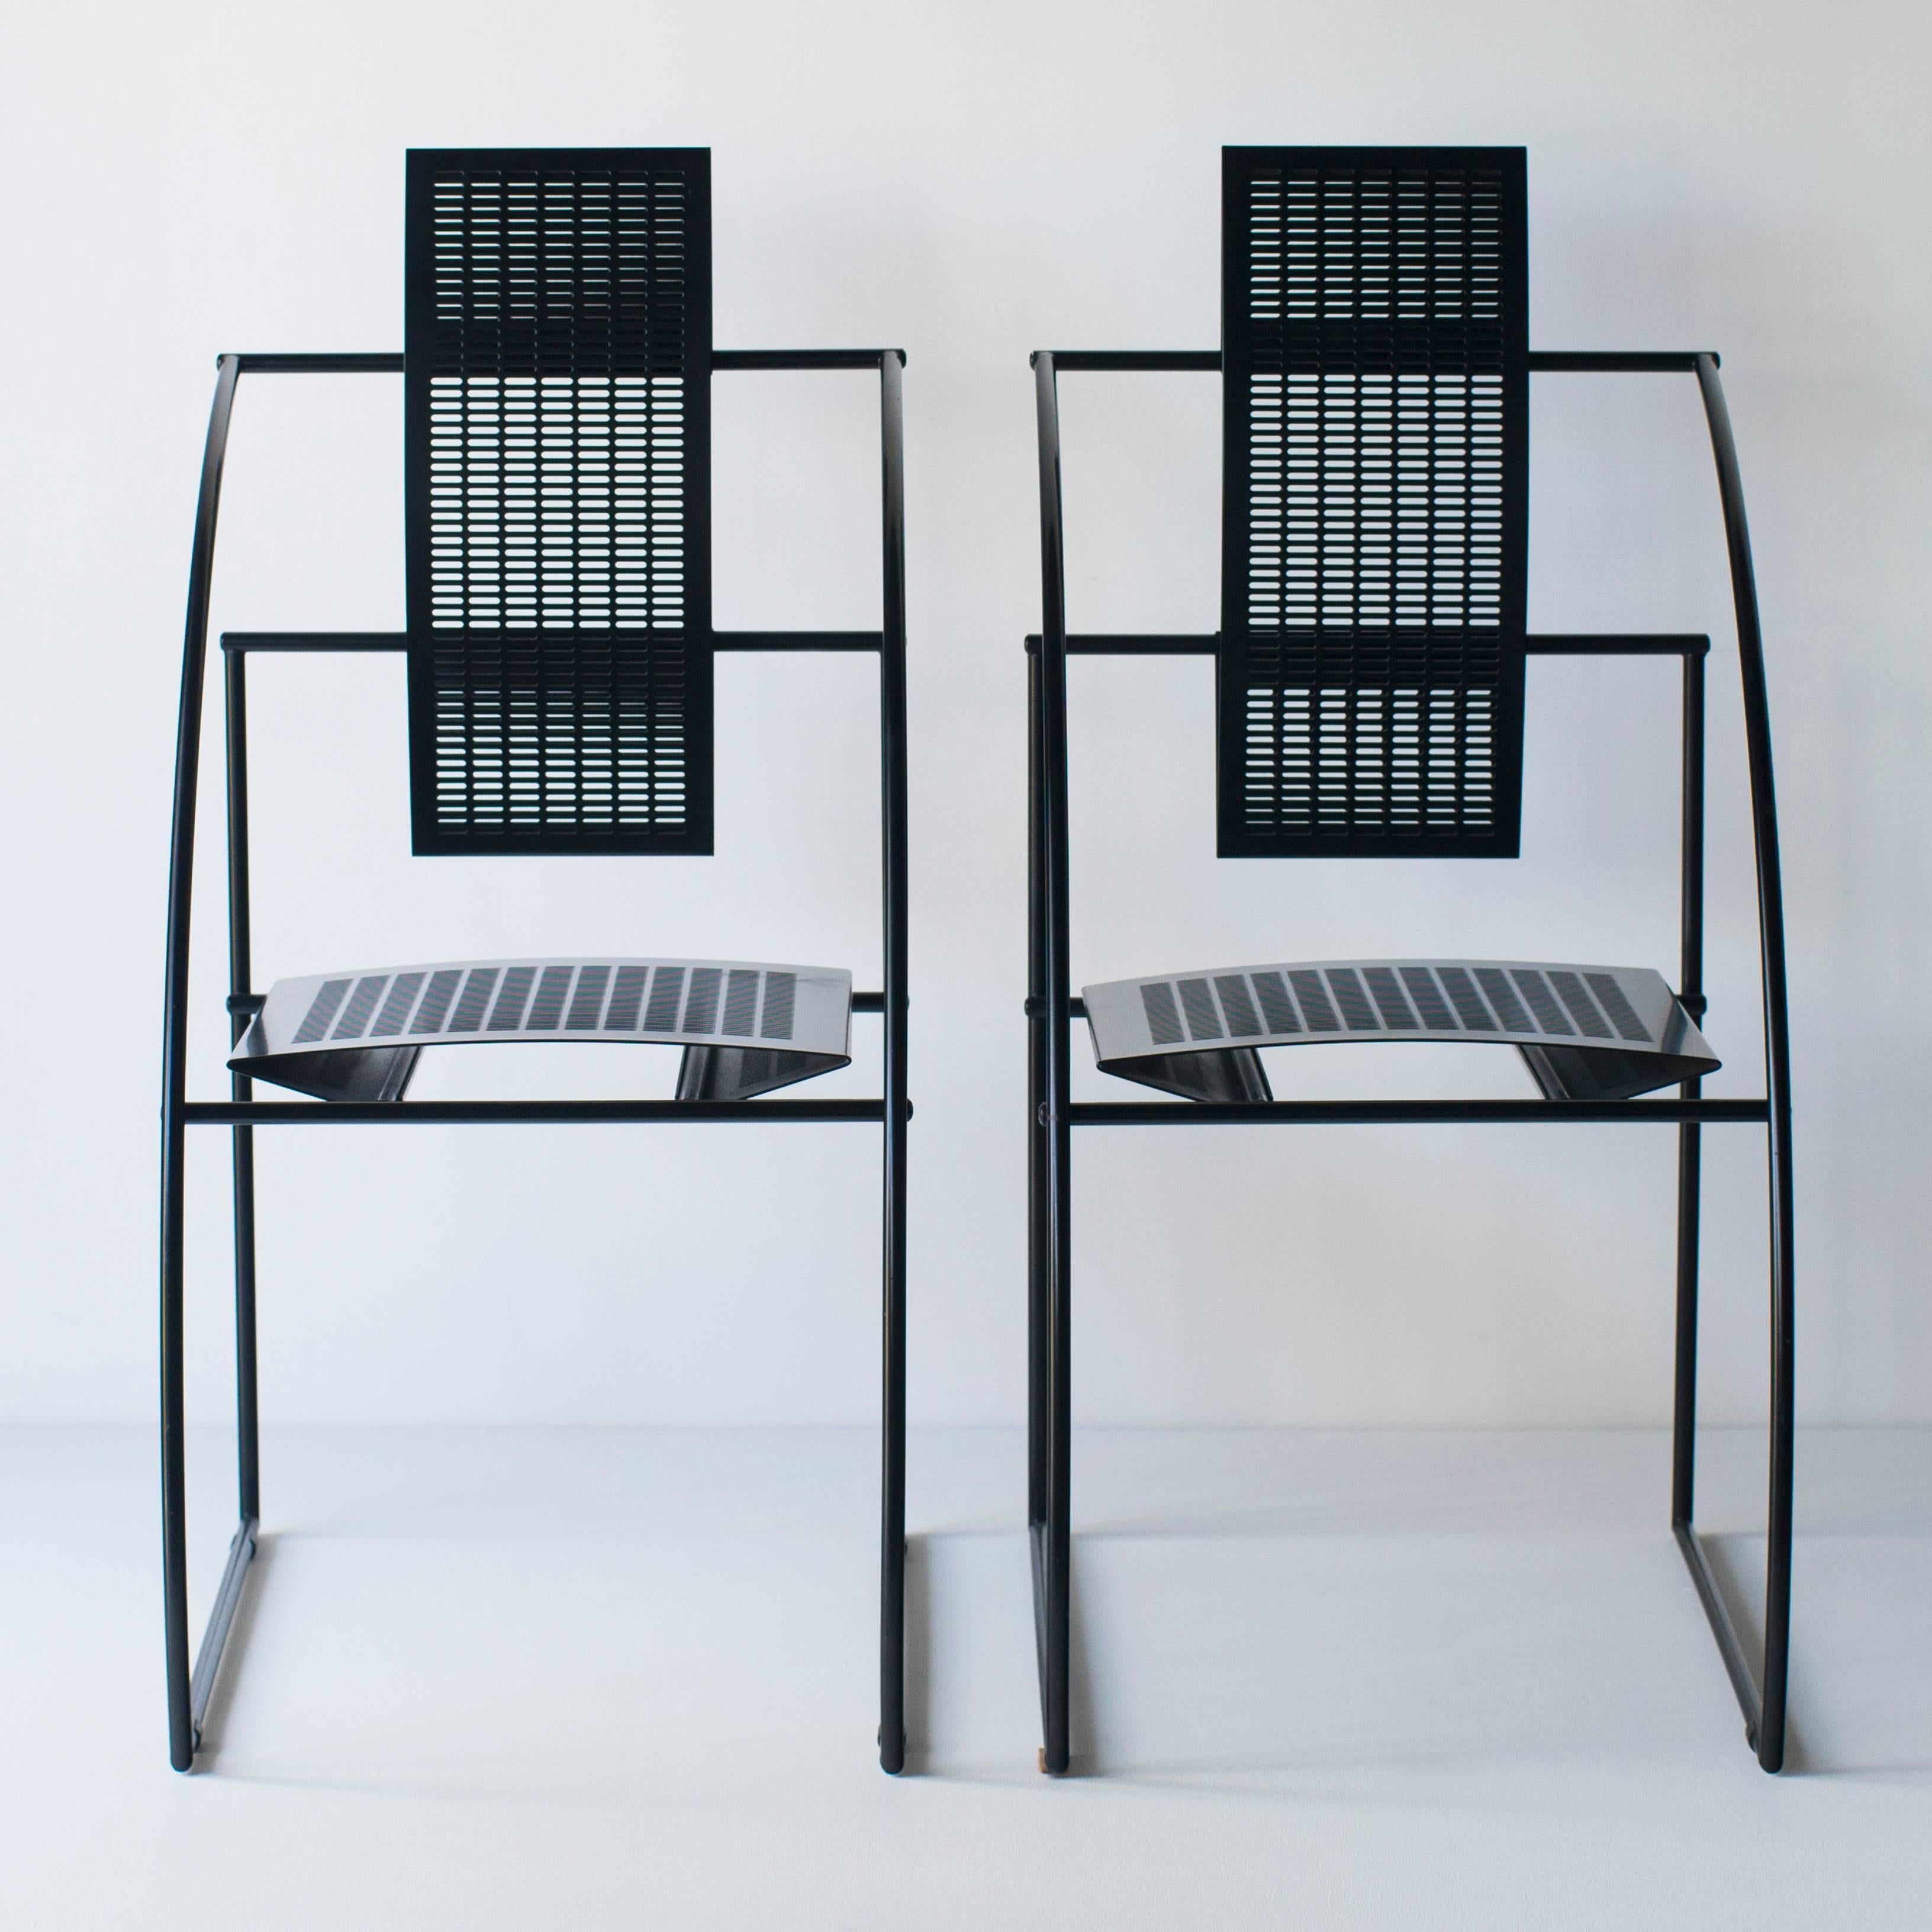 Painted Mario Botta Quinta Chair Alias Post Modern design